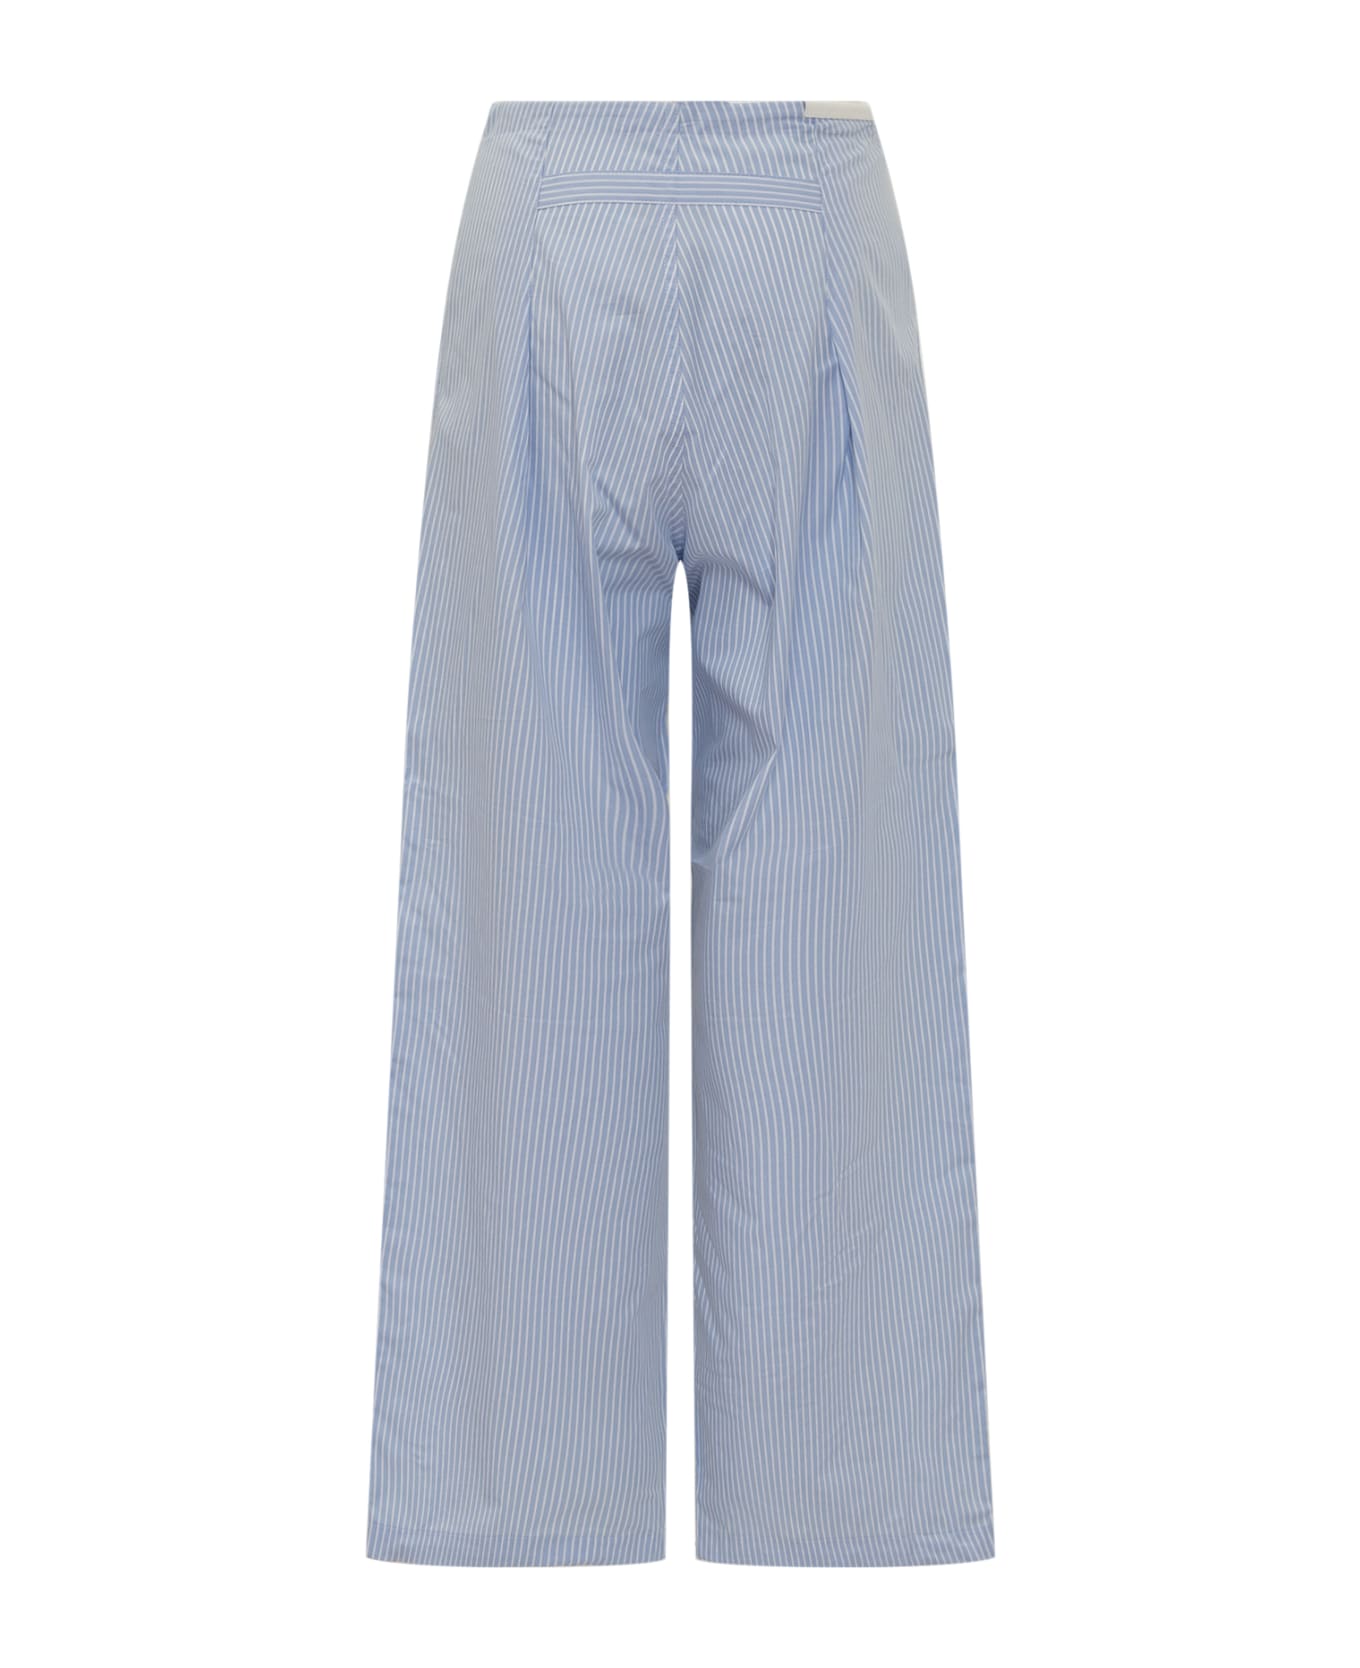 DARKPARK Daisy Milit Trousers - LIGHT BLUE/WHITE